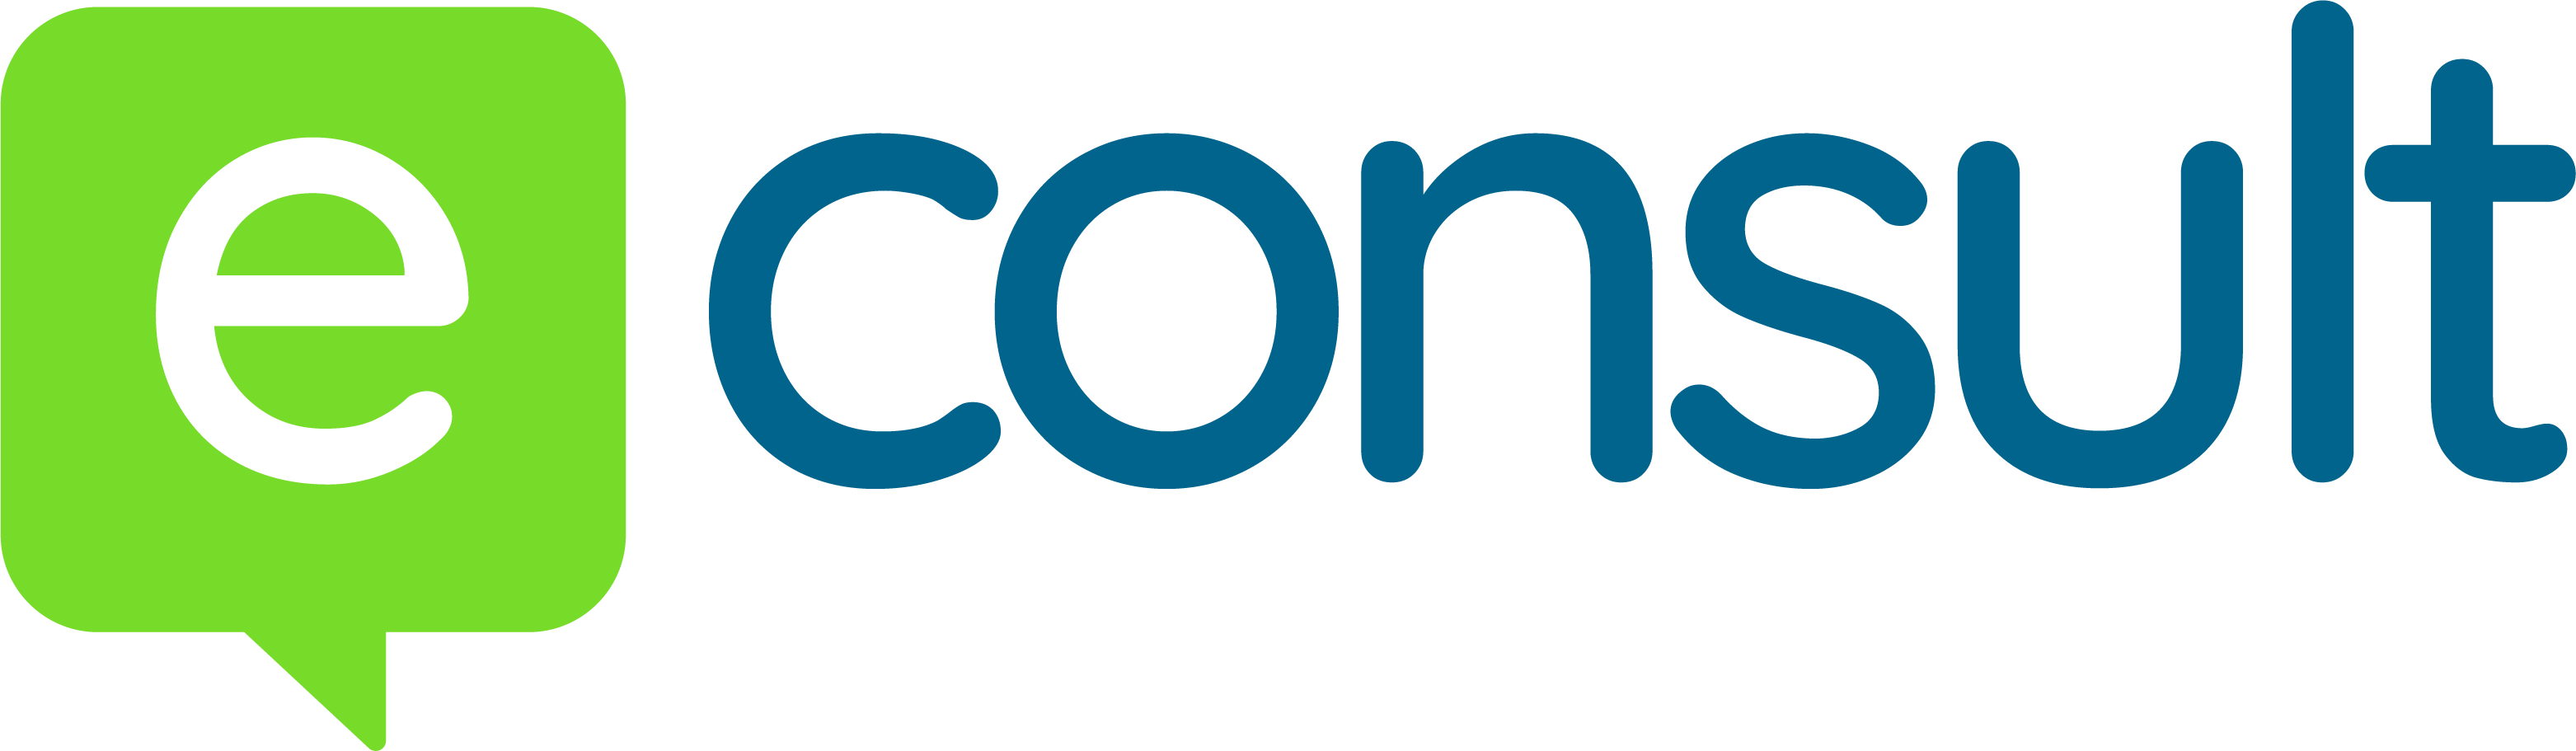 econsult logo